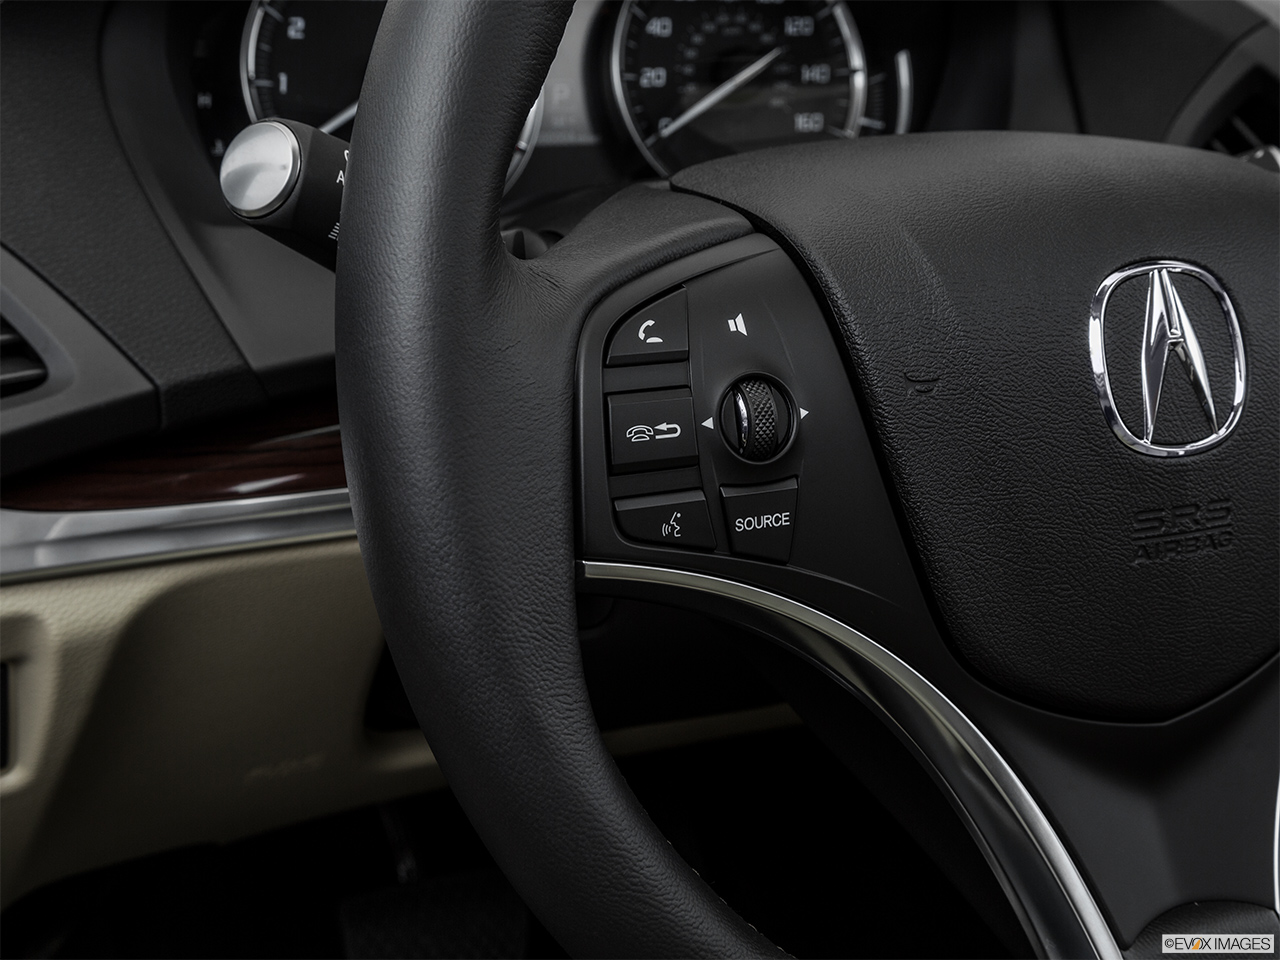 2016 Acura MDX SH-AWD Steering Wheel Controls (Left Side) 